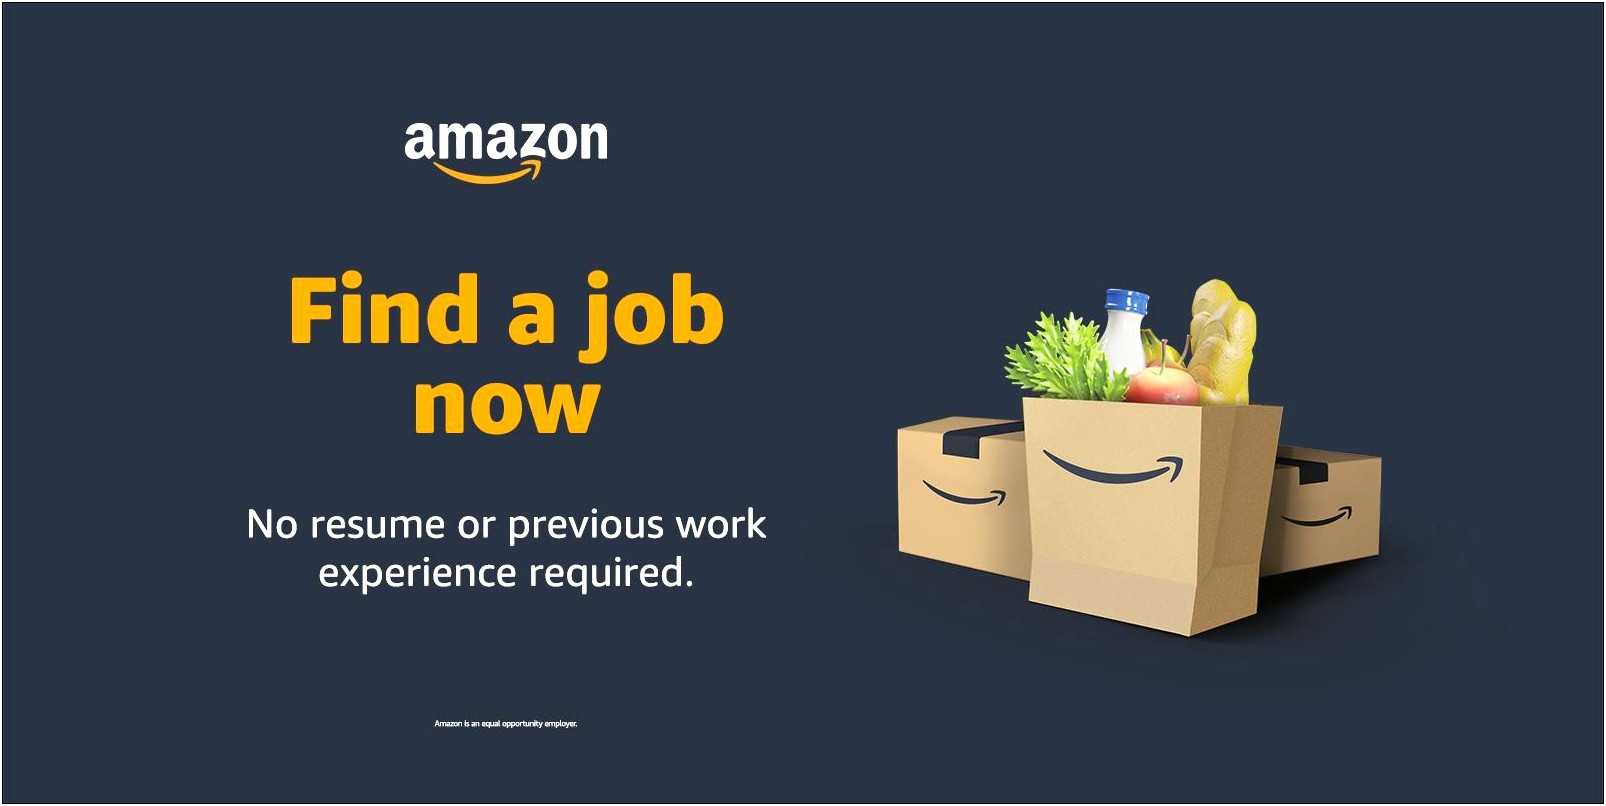 Can't Upload Resume Amazon Jobs